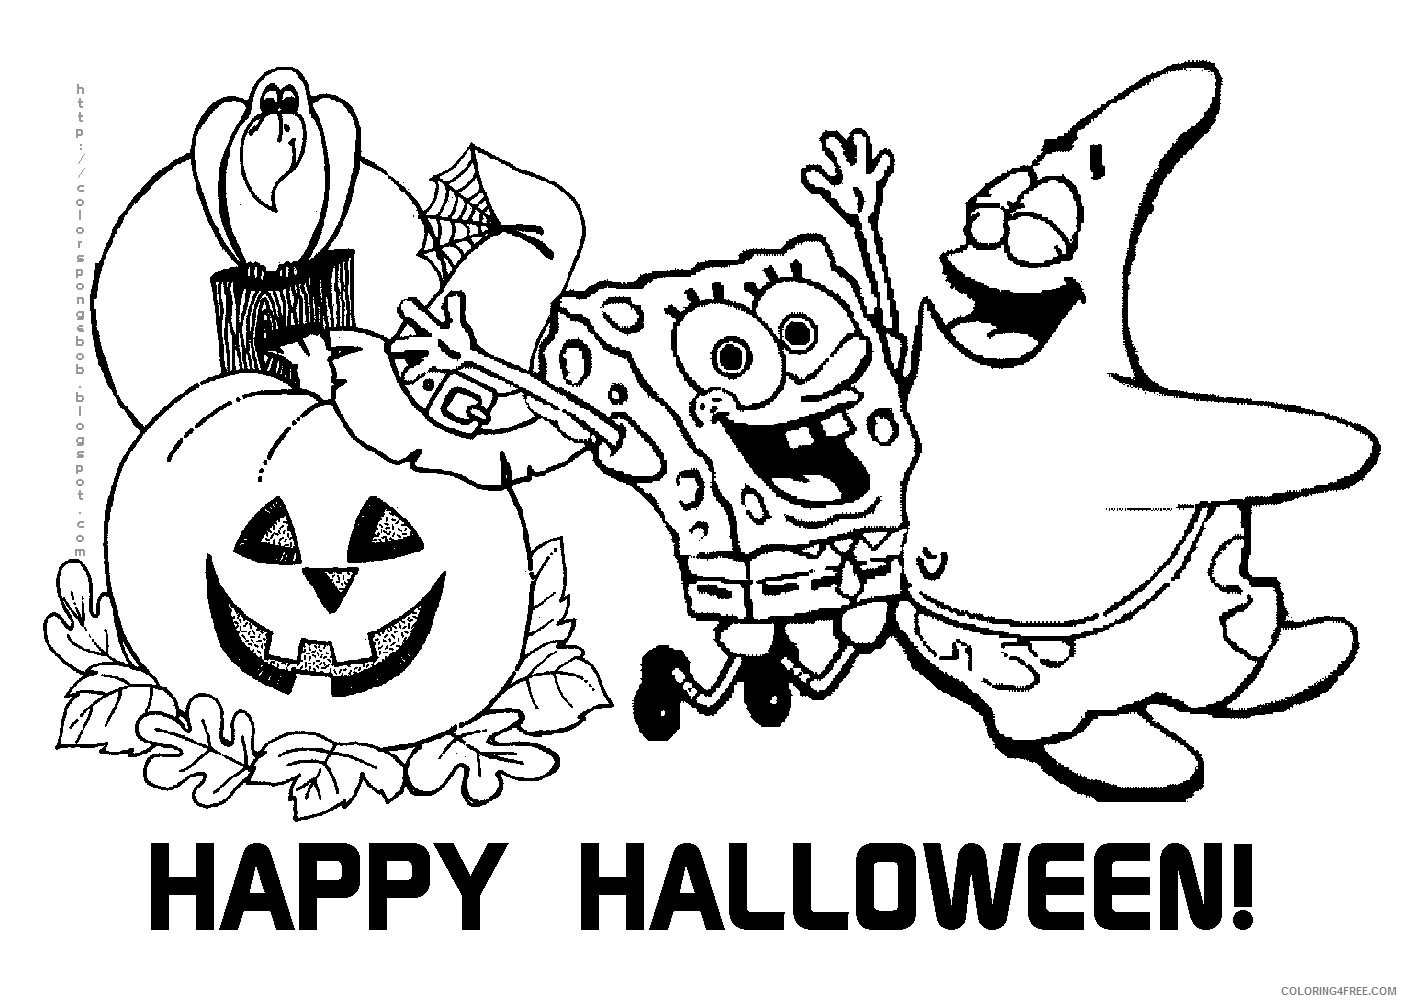 spongebob squarepants coloring pages halloween Coloring4free